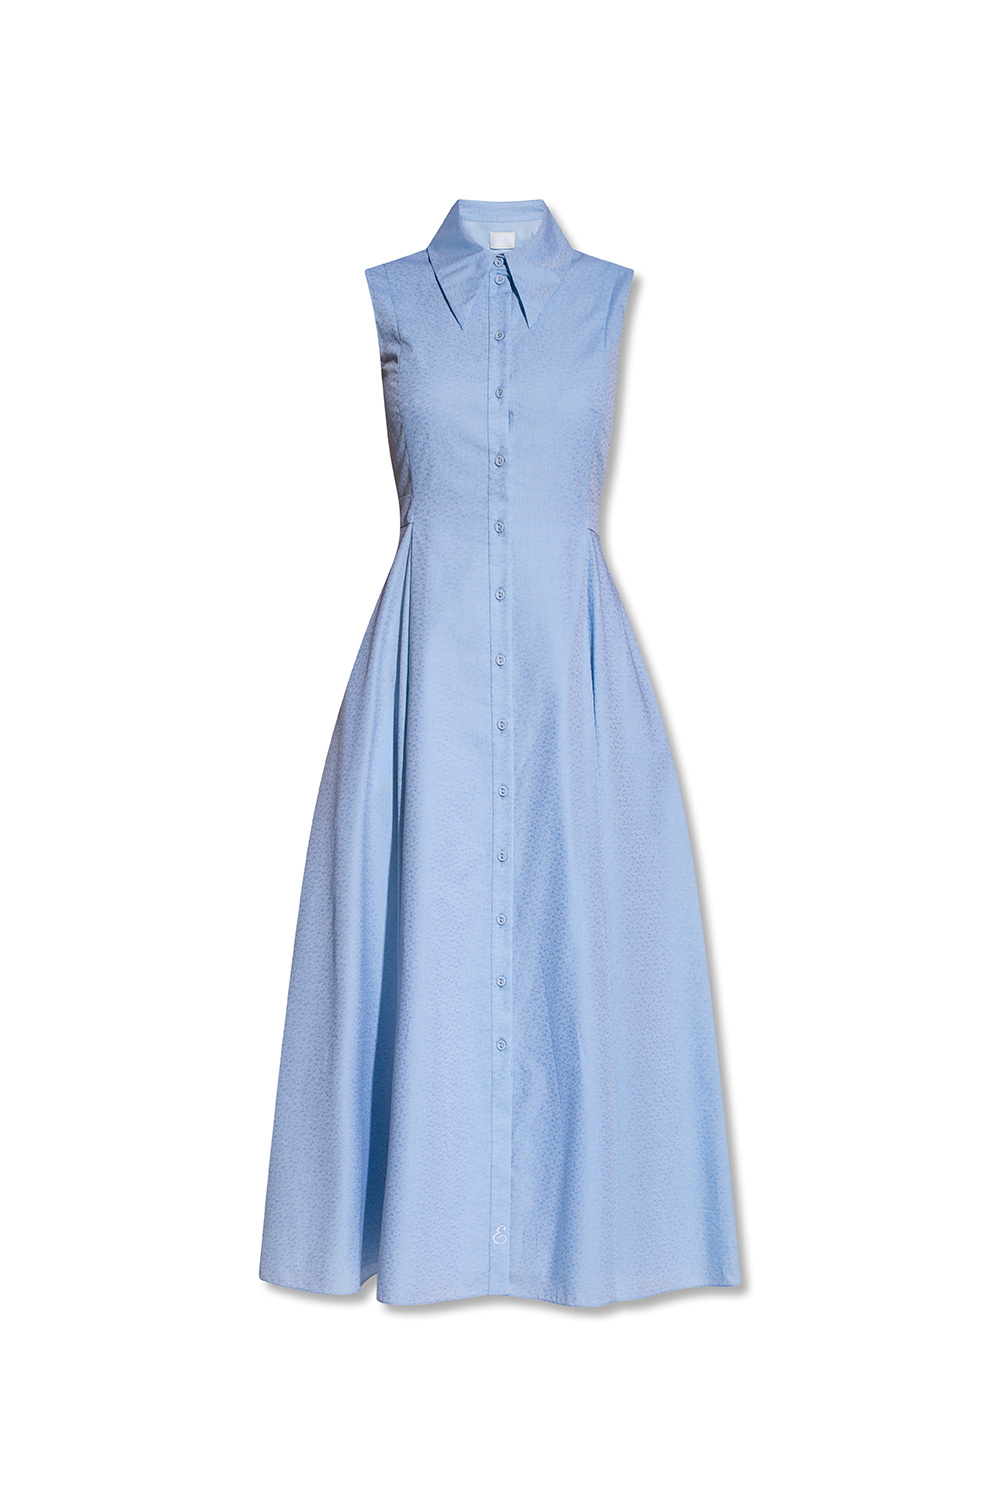 Erdem ‘Knightsbridge’ sleeveless dress